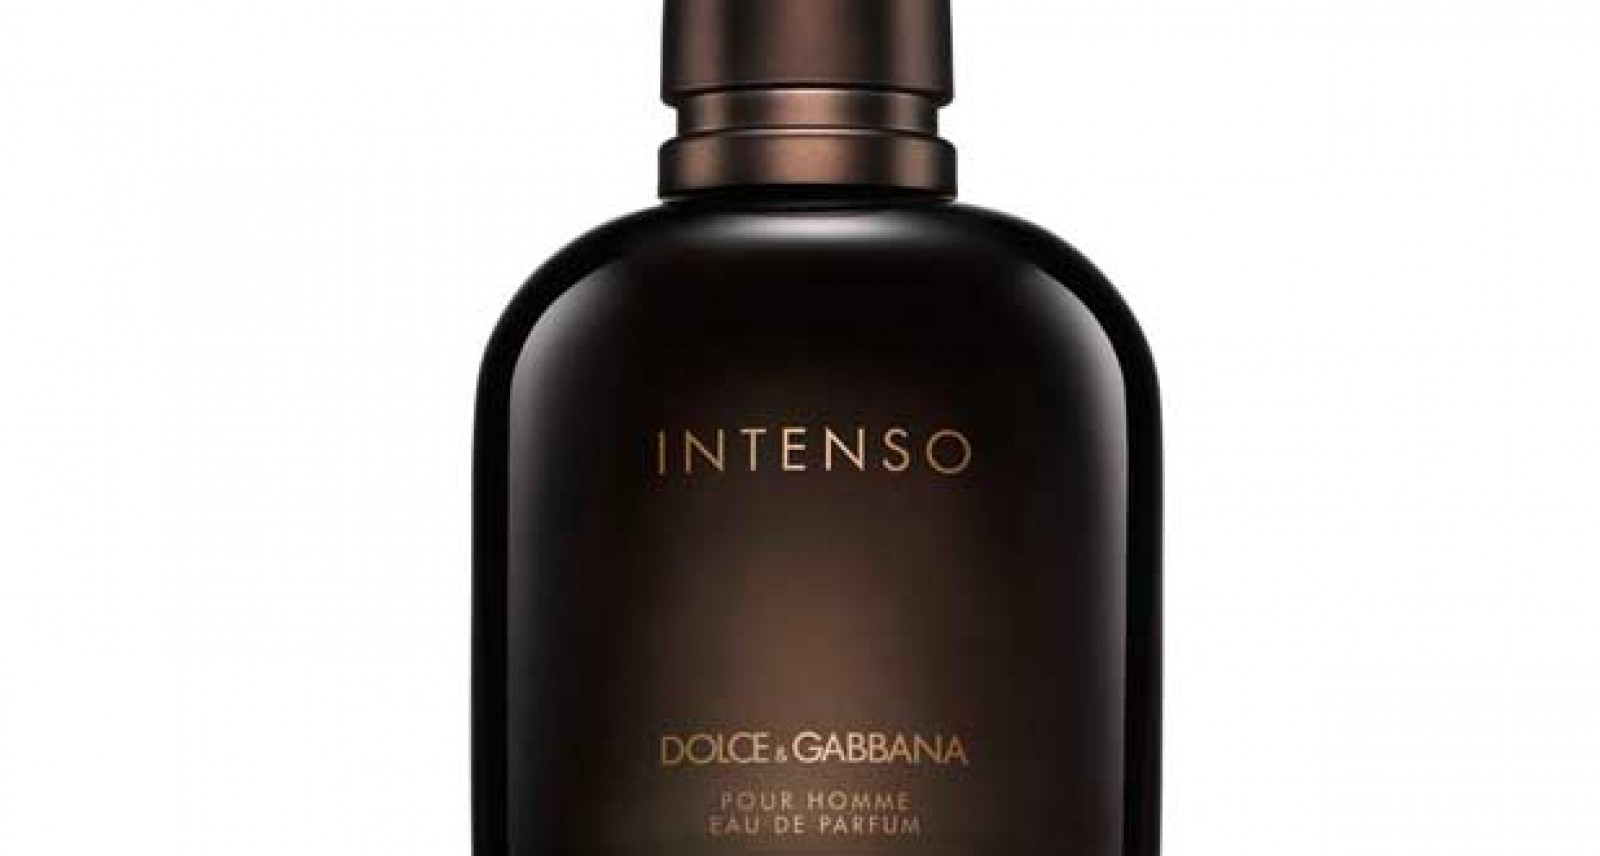 Dolce & Gabbana’s latest fragrance for men: Intenso | Sharp Magazine